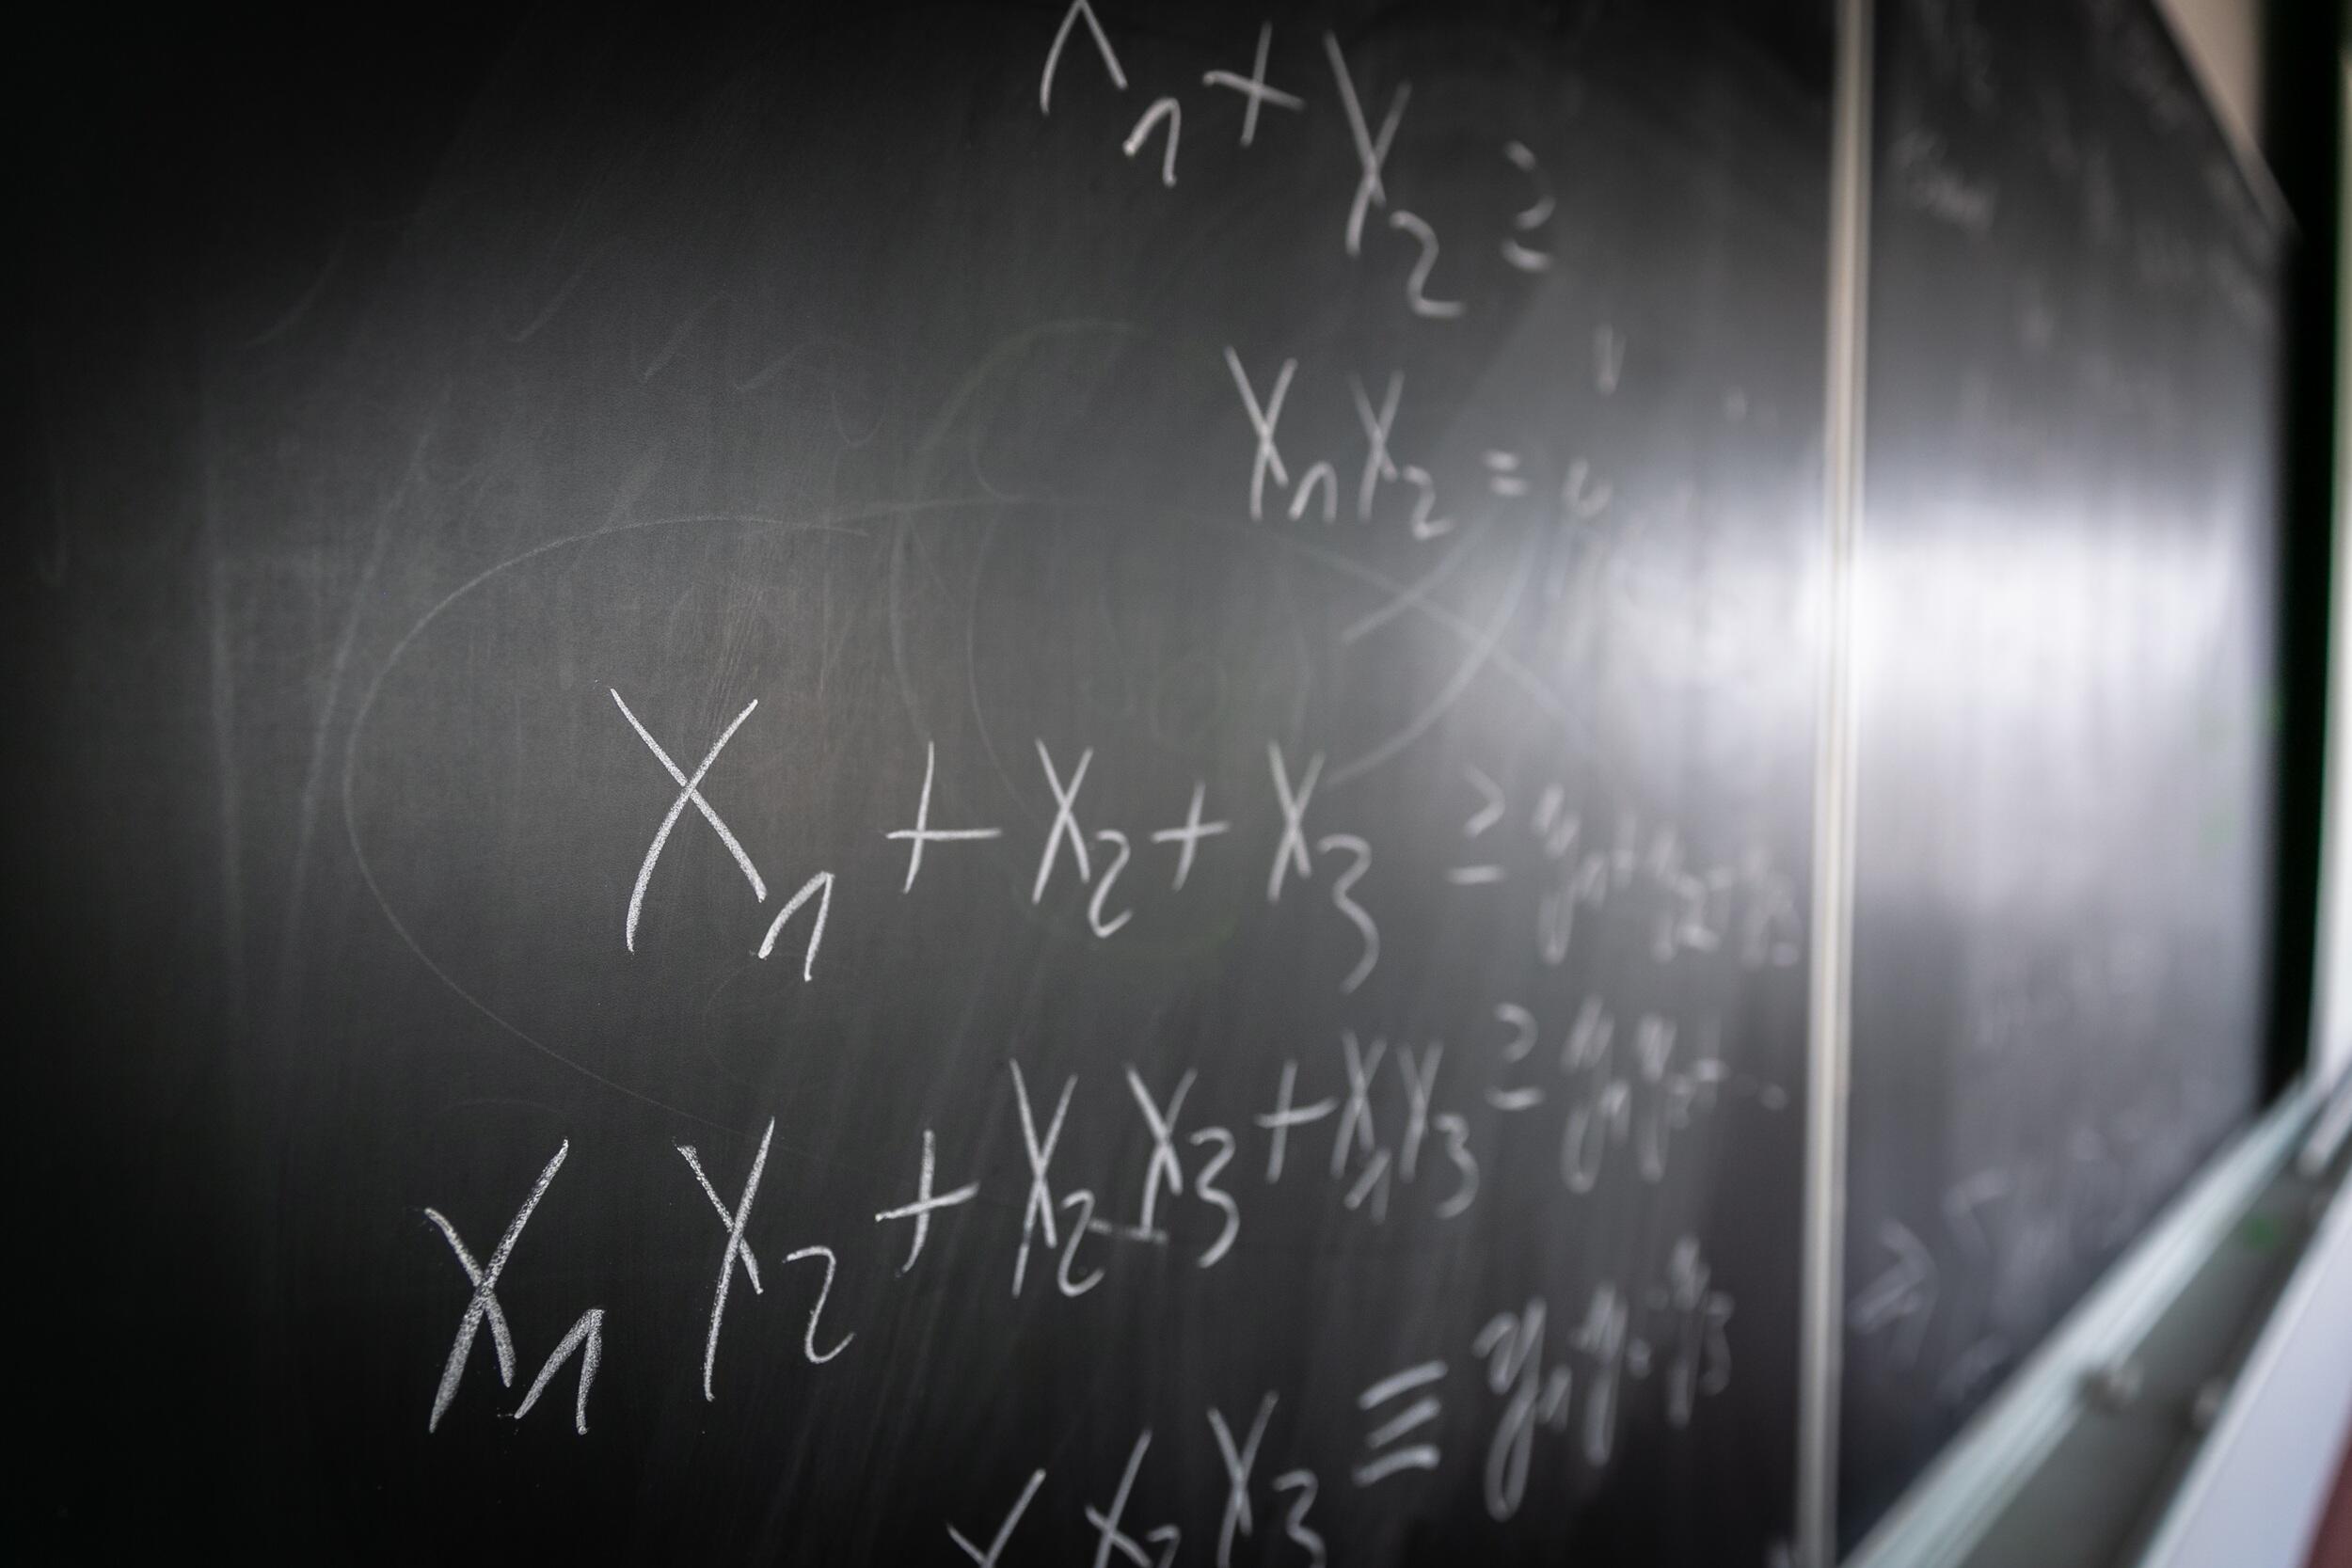 Mathematical equations written on a chalkboard.